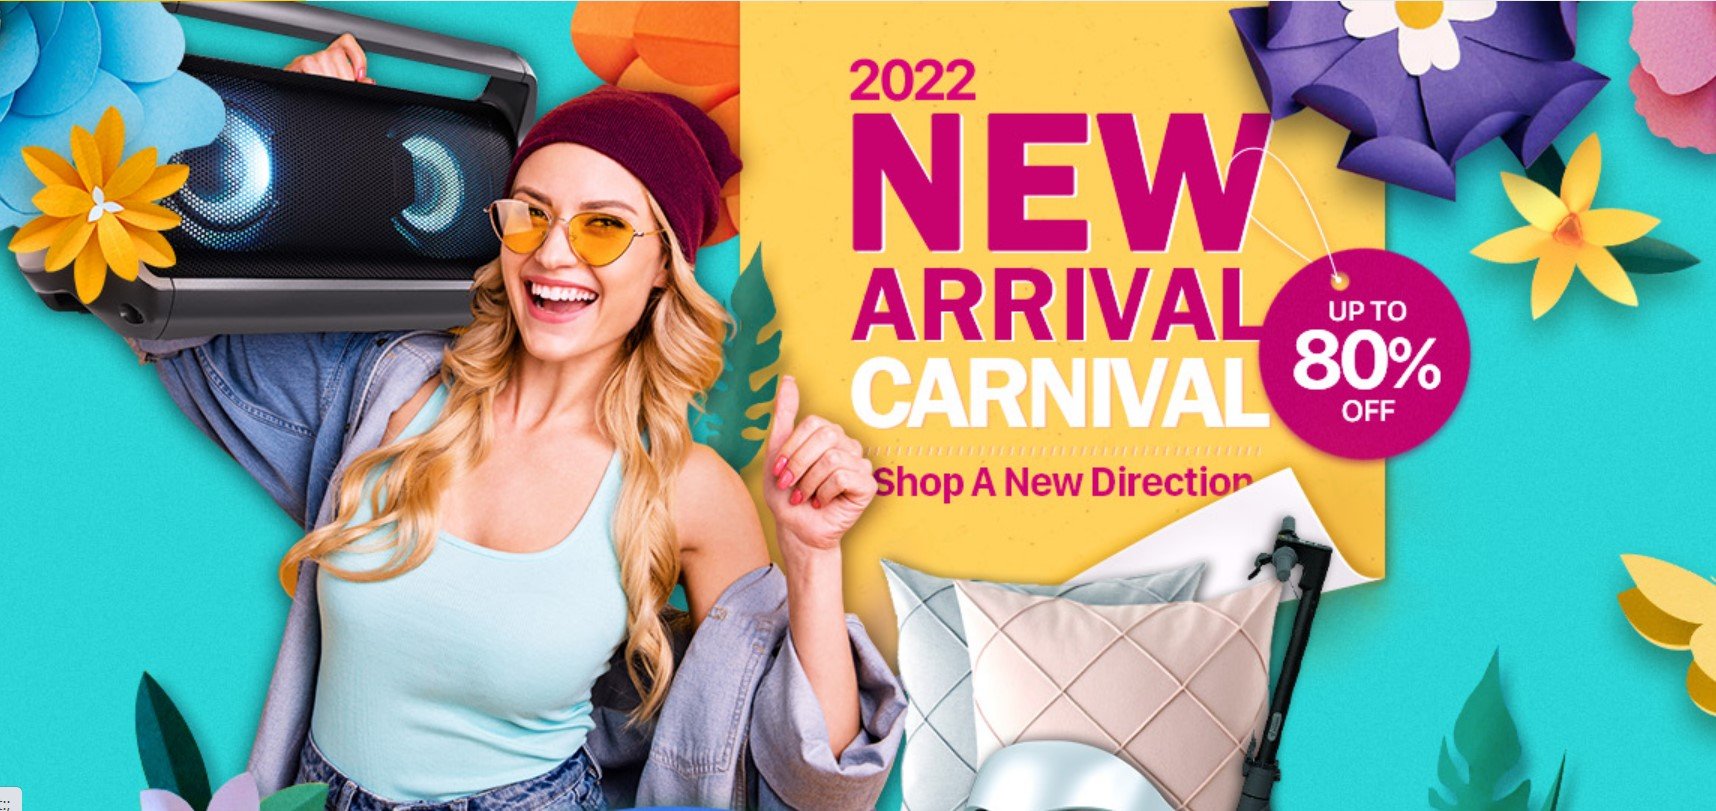 DHgate carnival 2022